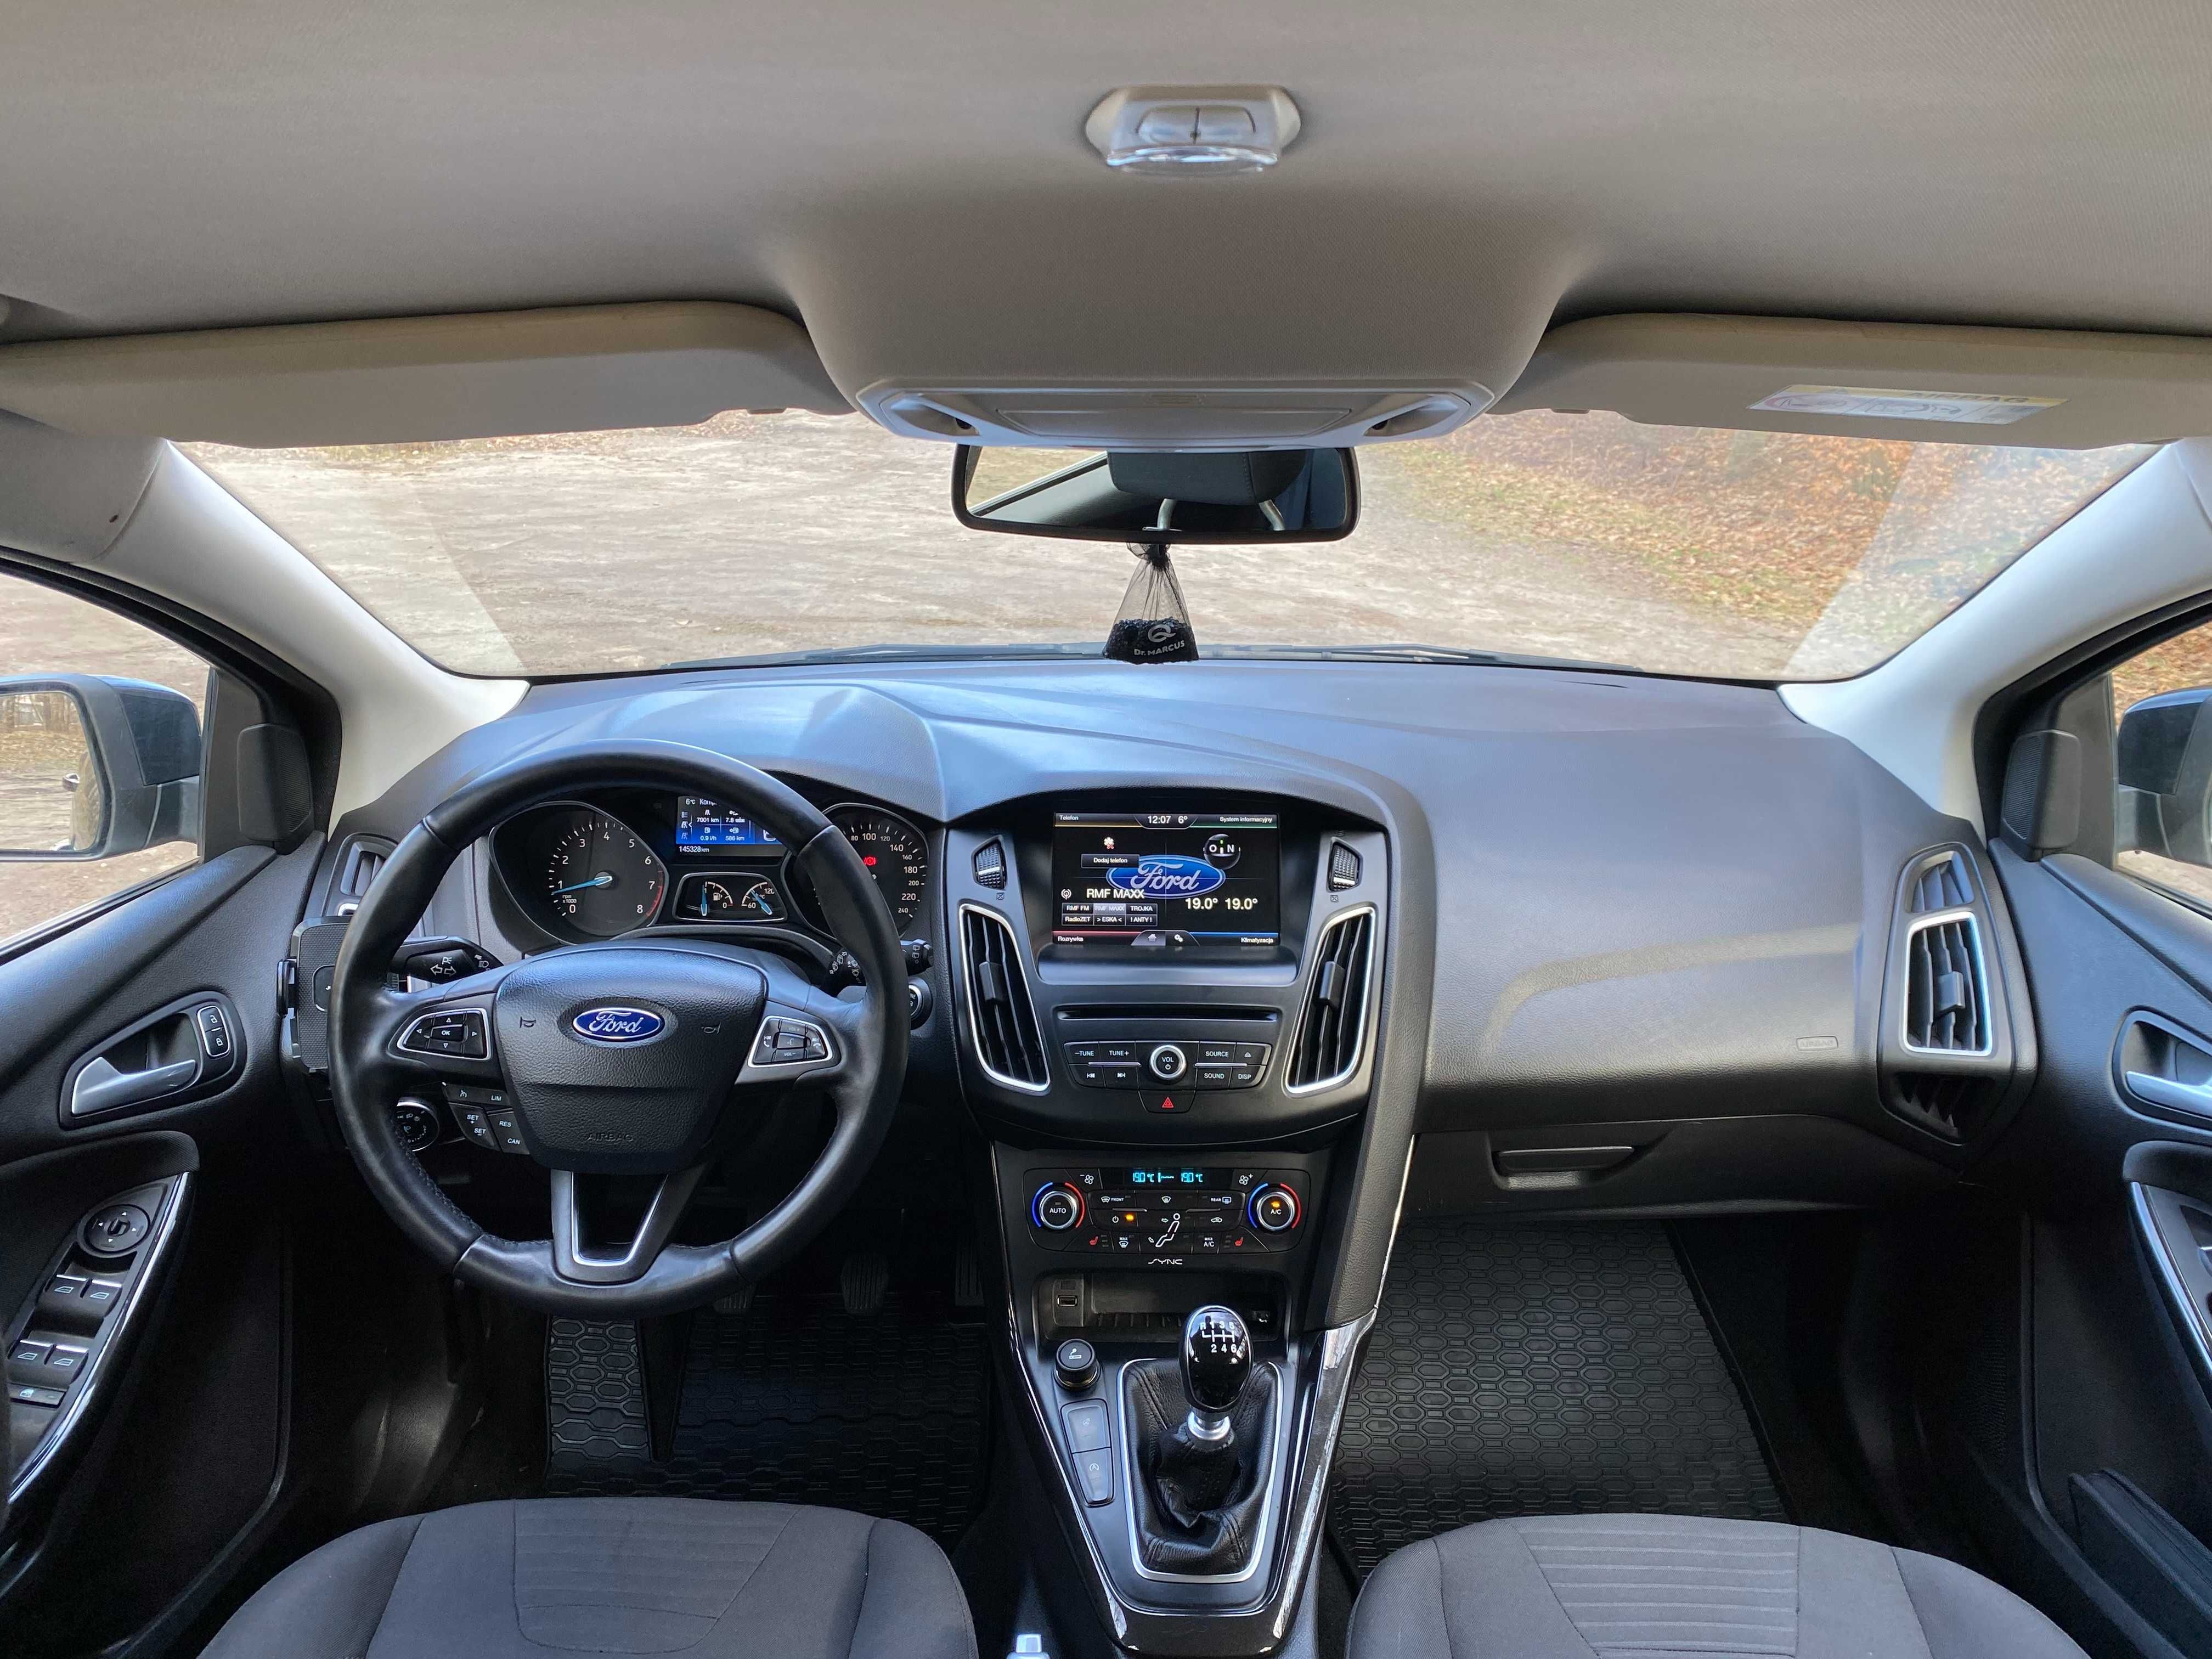 Ford Focus Kombi 1.5 16v Ecoboost 150 KM, Lift 2015 Bogate wyposażenie